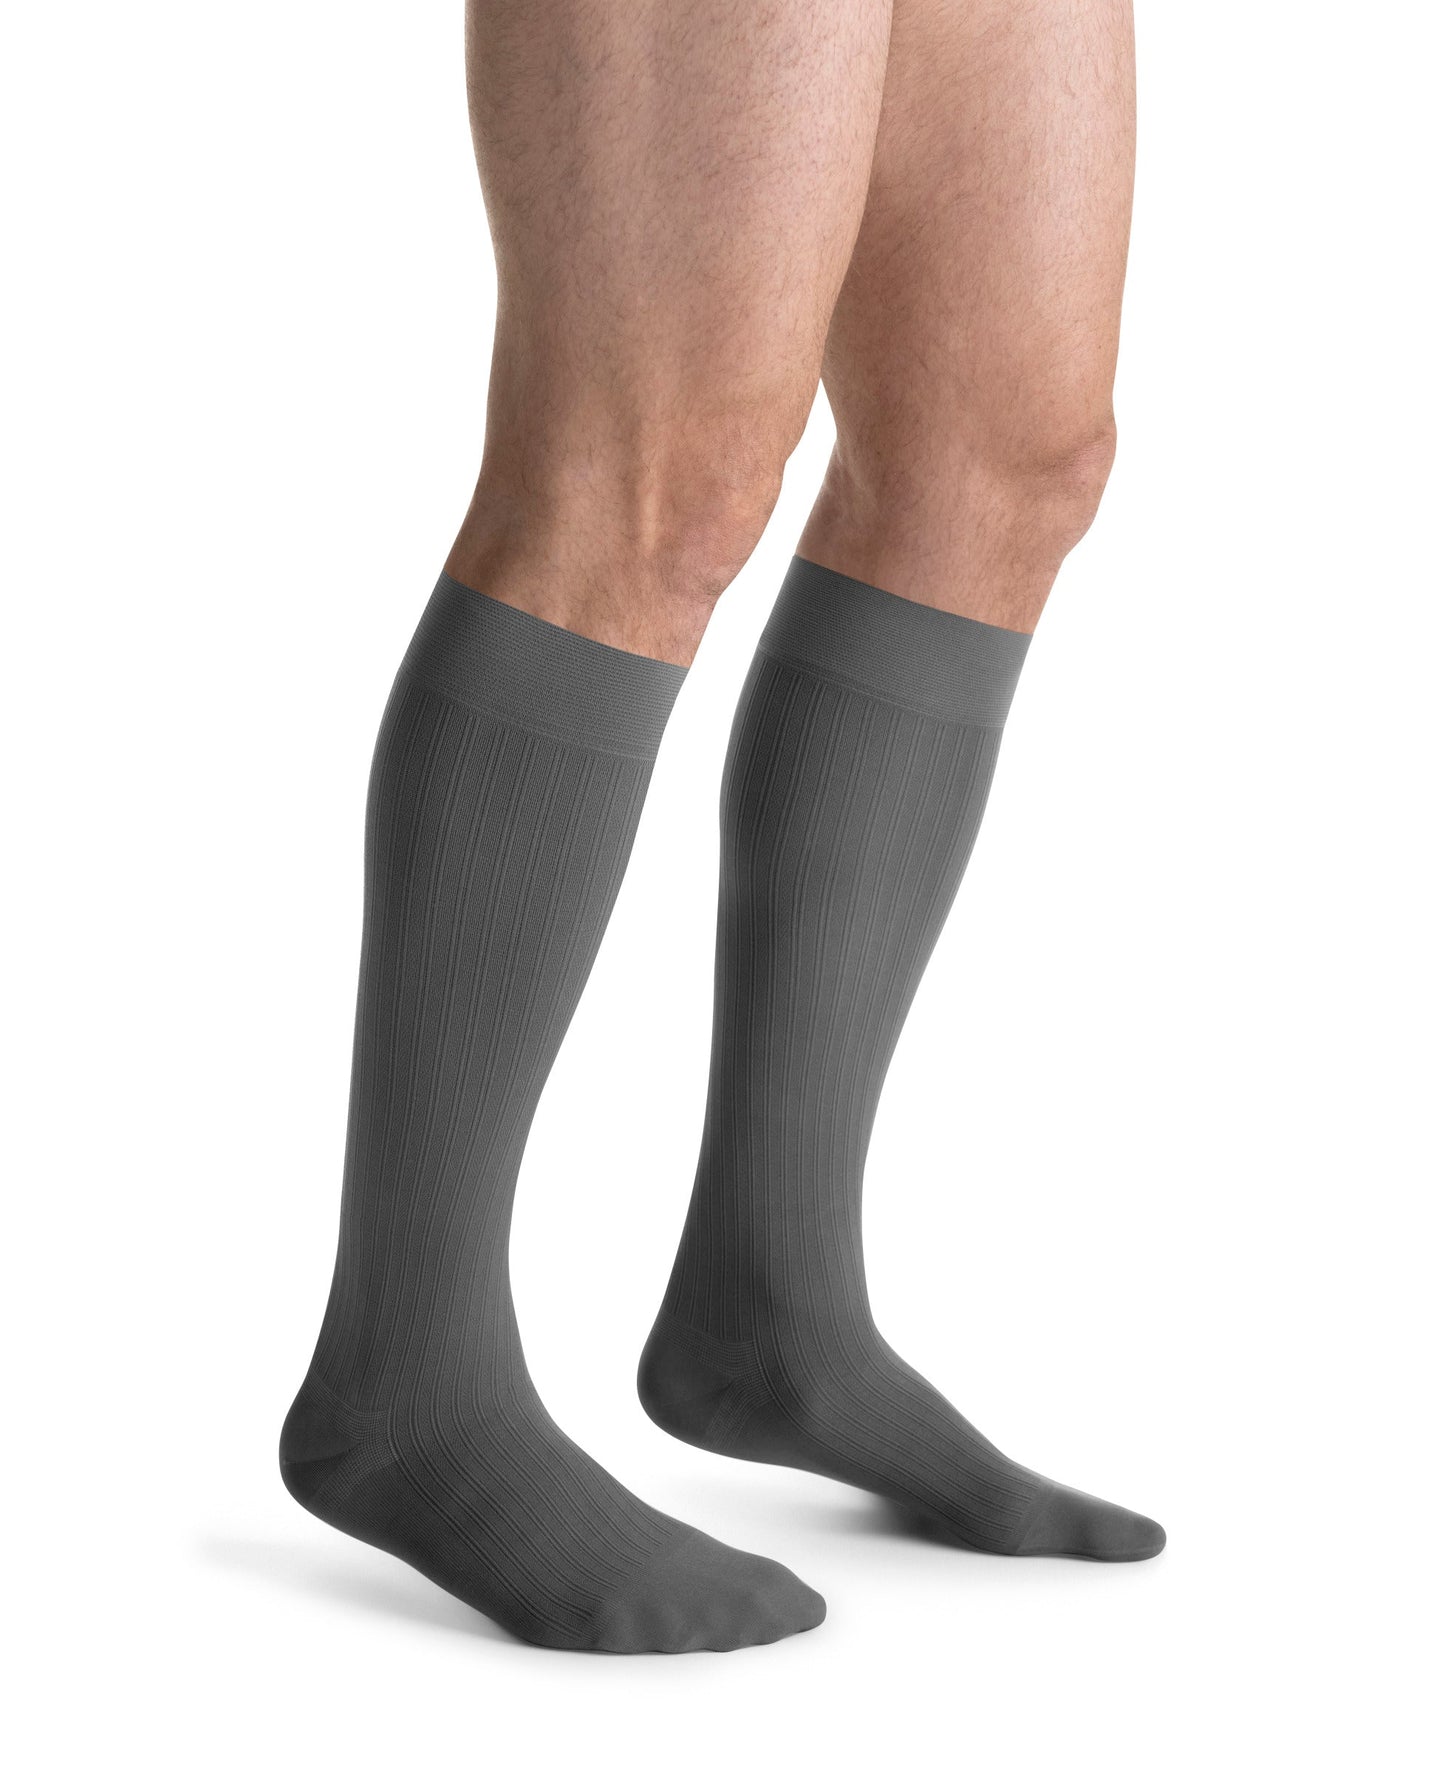 JOBST forMen Ambition Compression Socks 30-40 mmHg Knee High SoftFit Closed Toe